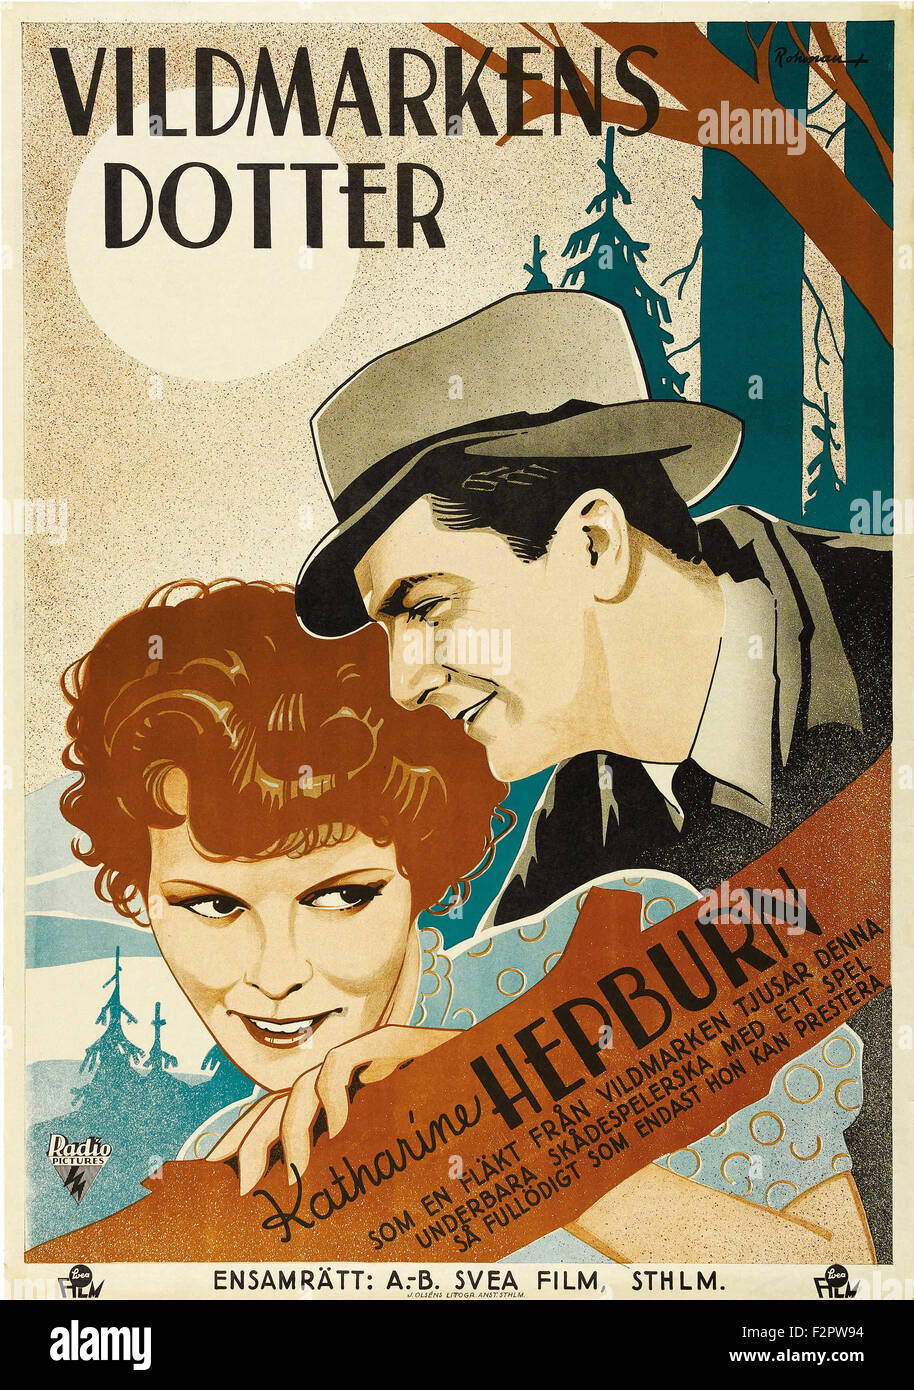 Spitfire (1934) - Movie Poster Stock Photo